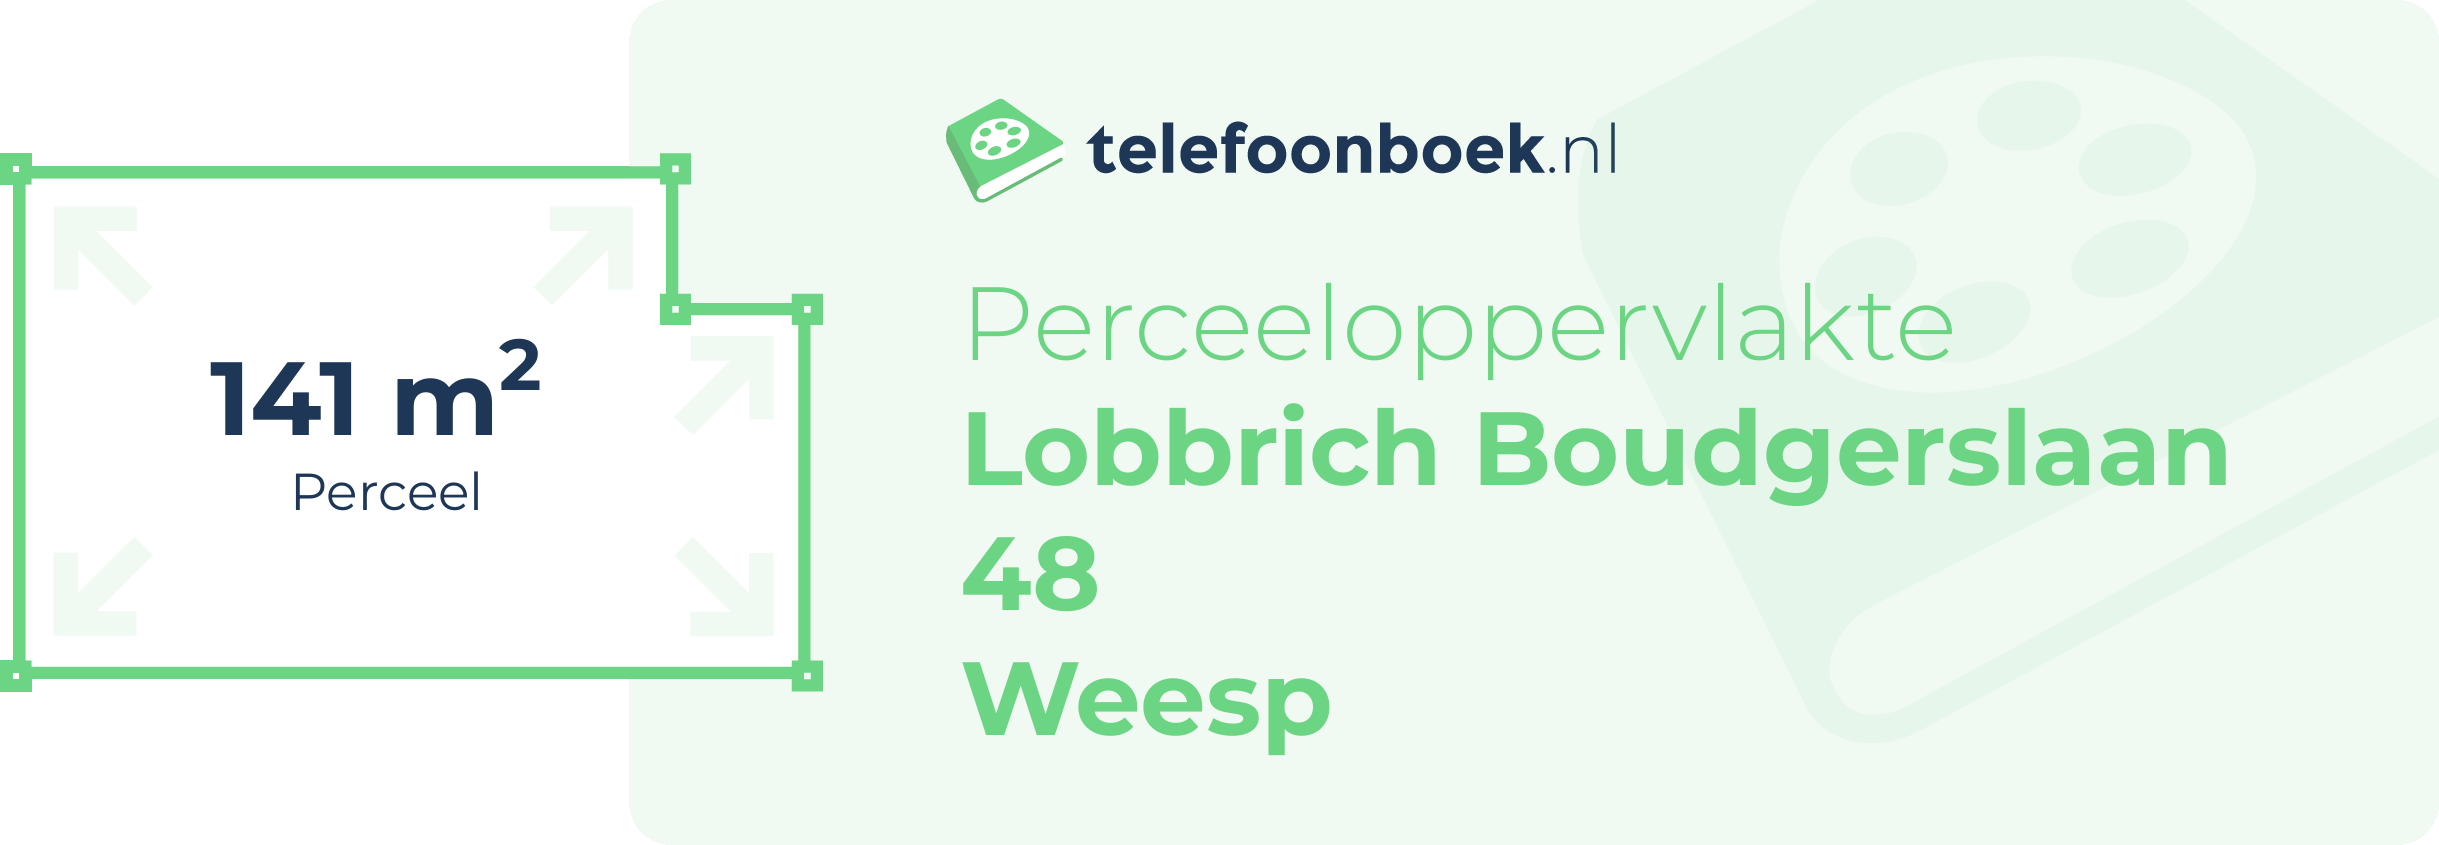 Perceeloppervlakte Lobbrich Boudgerslaan 48 Weesp